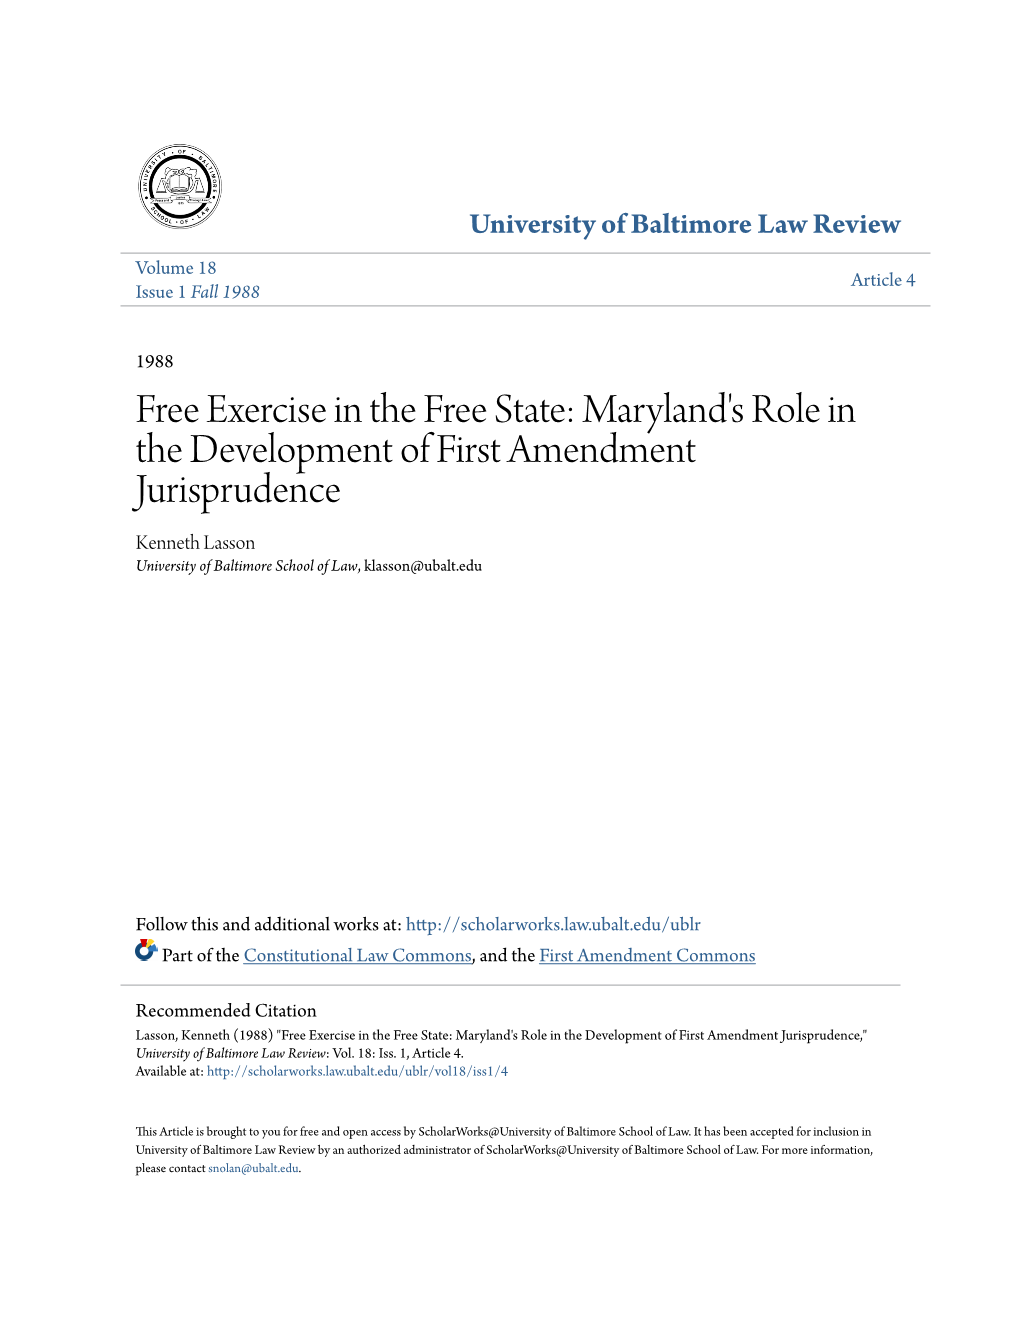 Maryland's Role in the Development of First Amendment Jurisprudence Kenneth Lasson University of Baltimore School of Law, Klasson@Ubalt.Edu